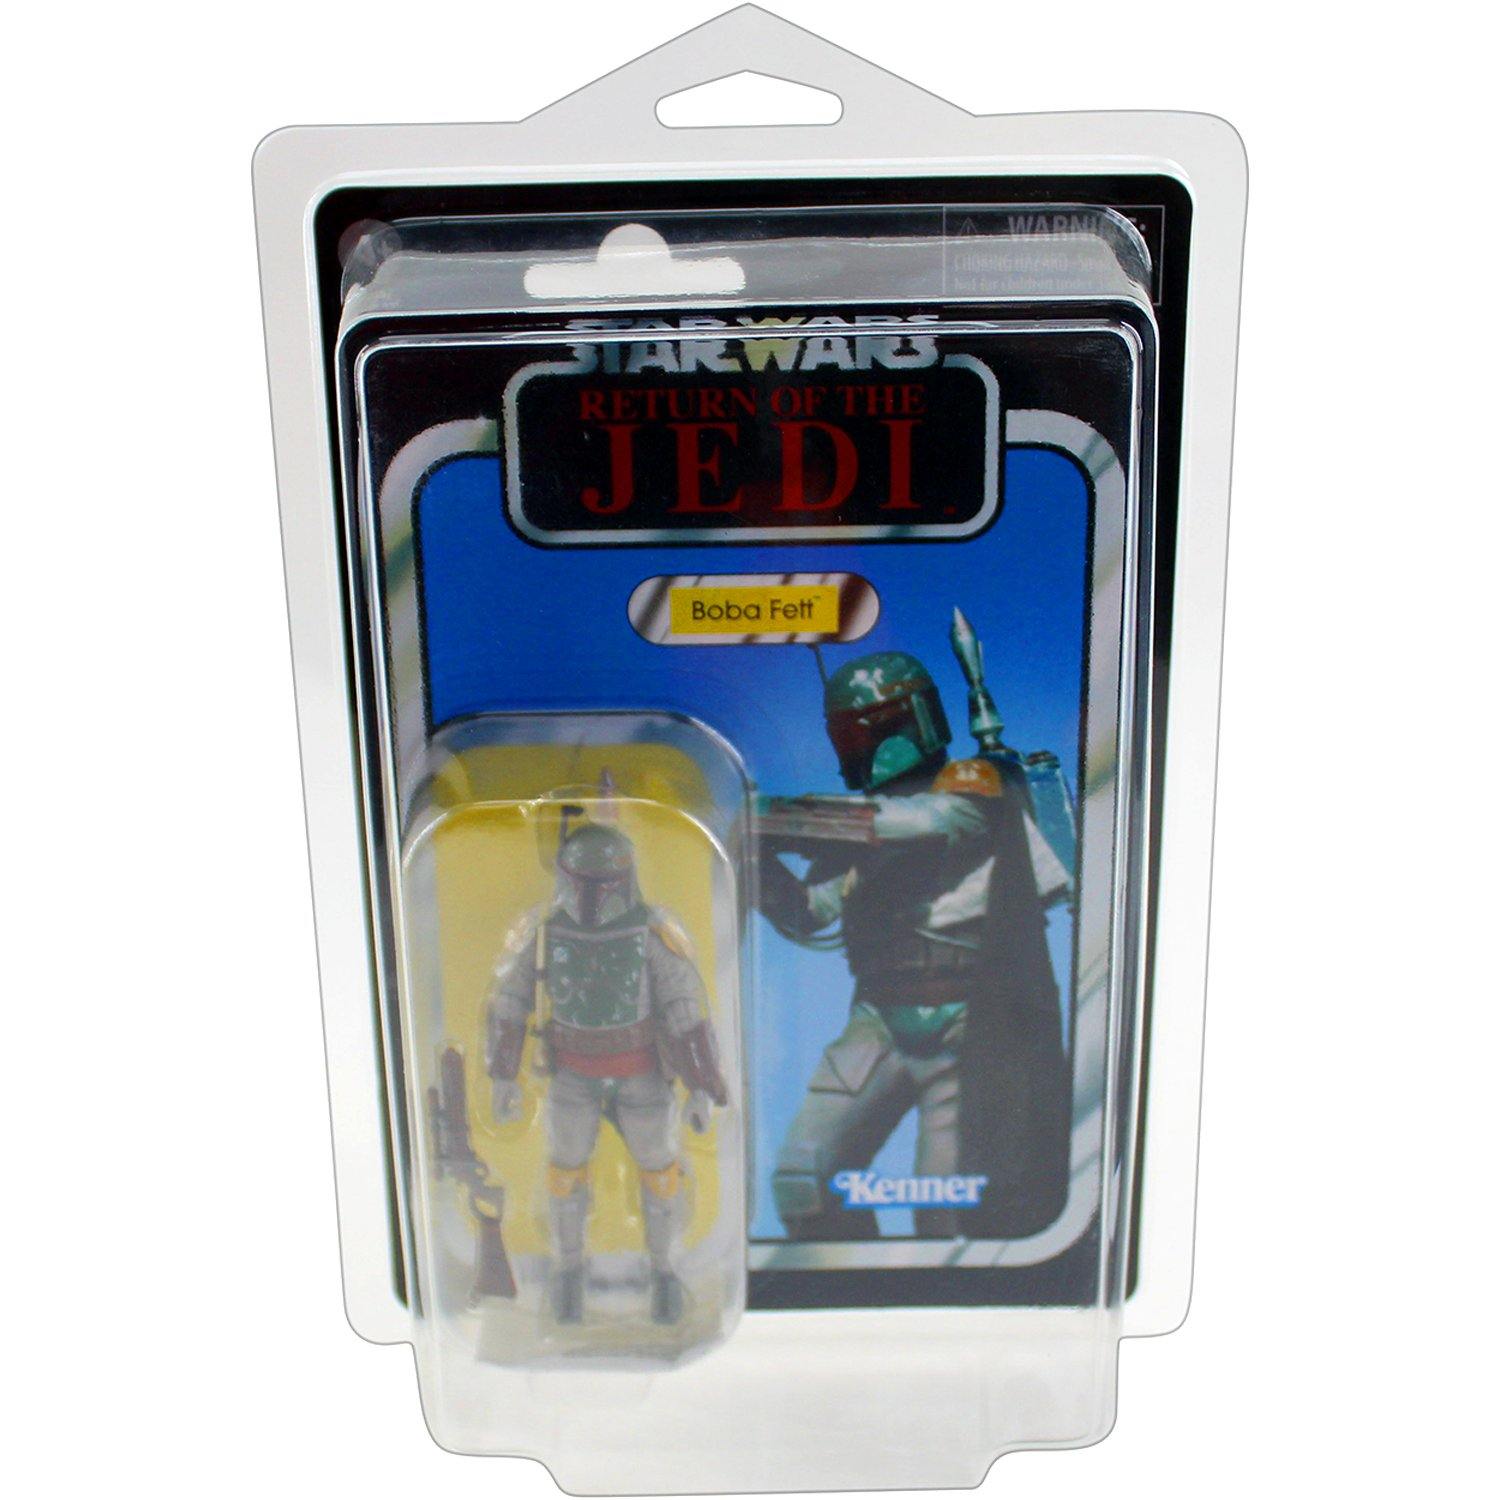 Protector for Star Wars and GI Joe Carded Figures